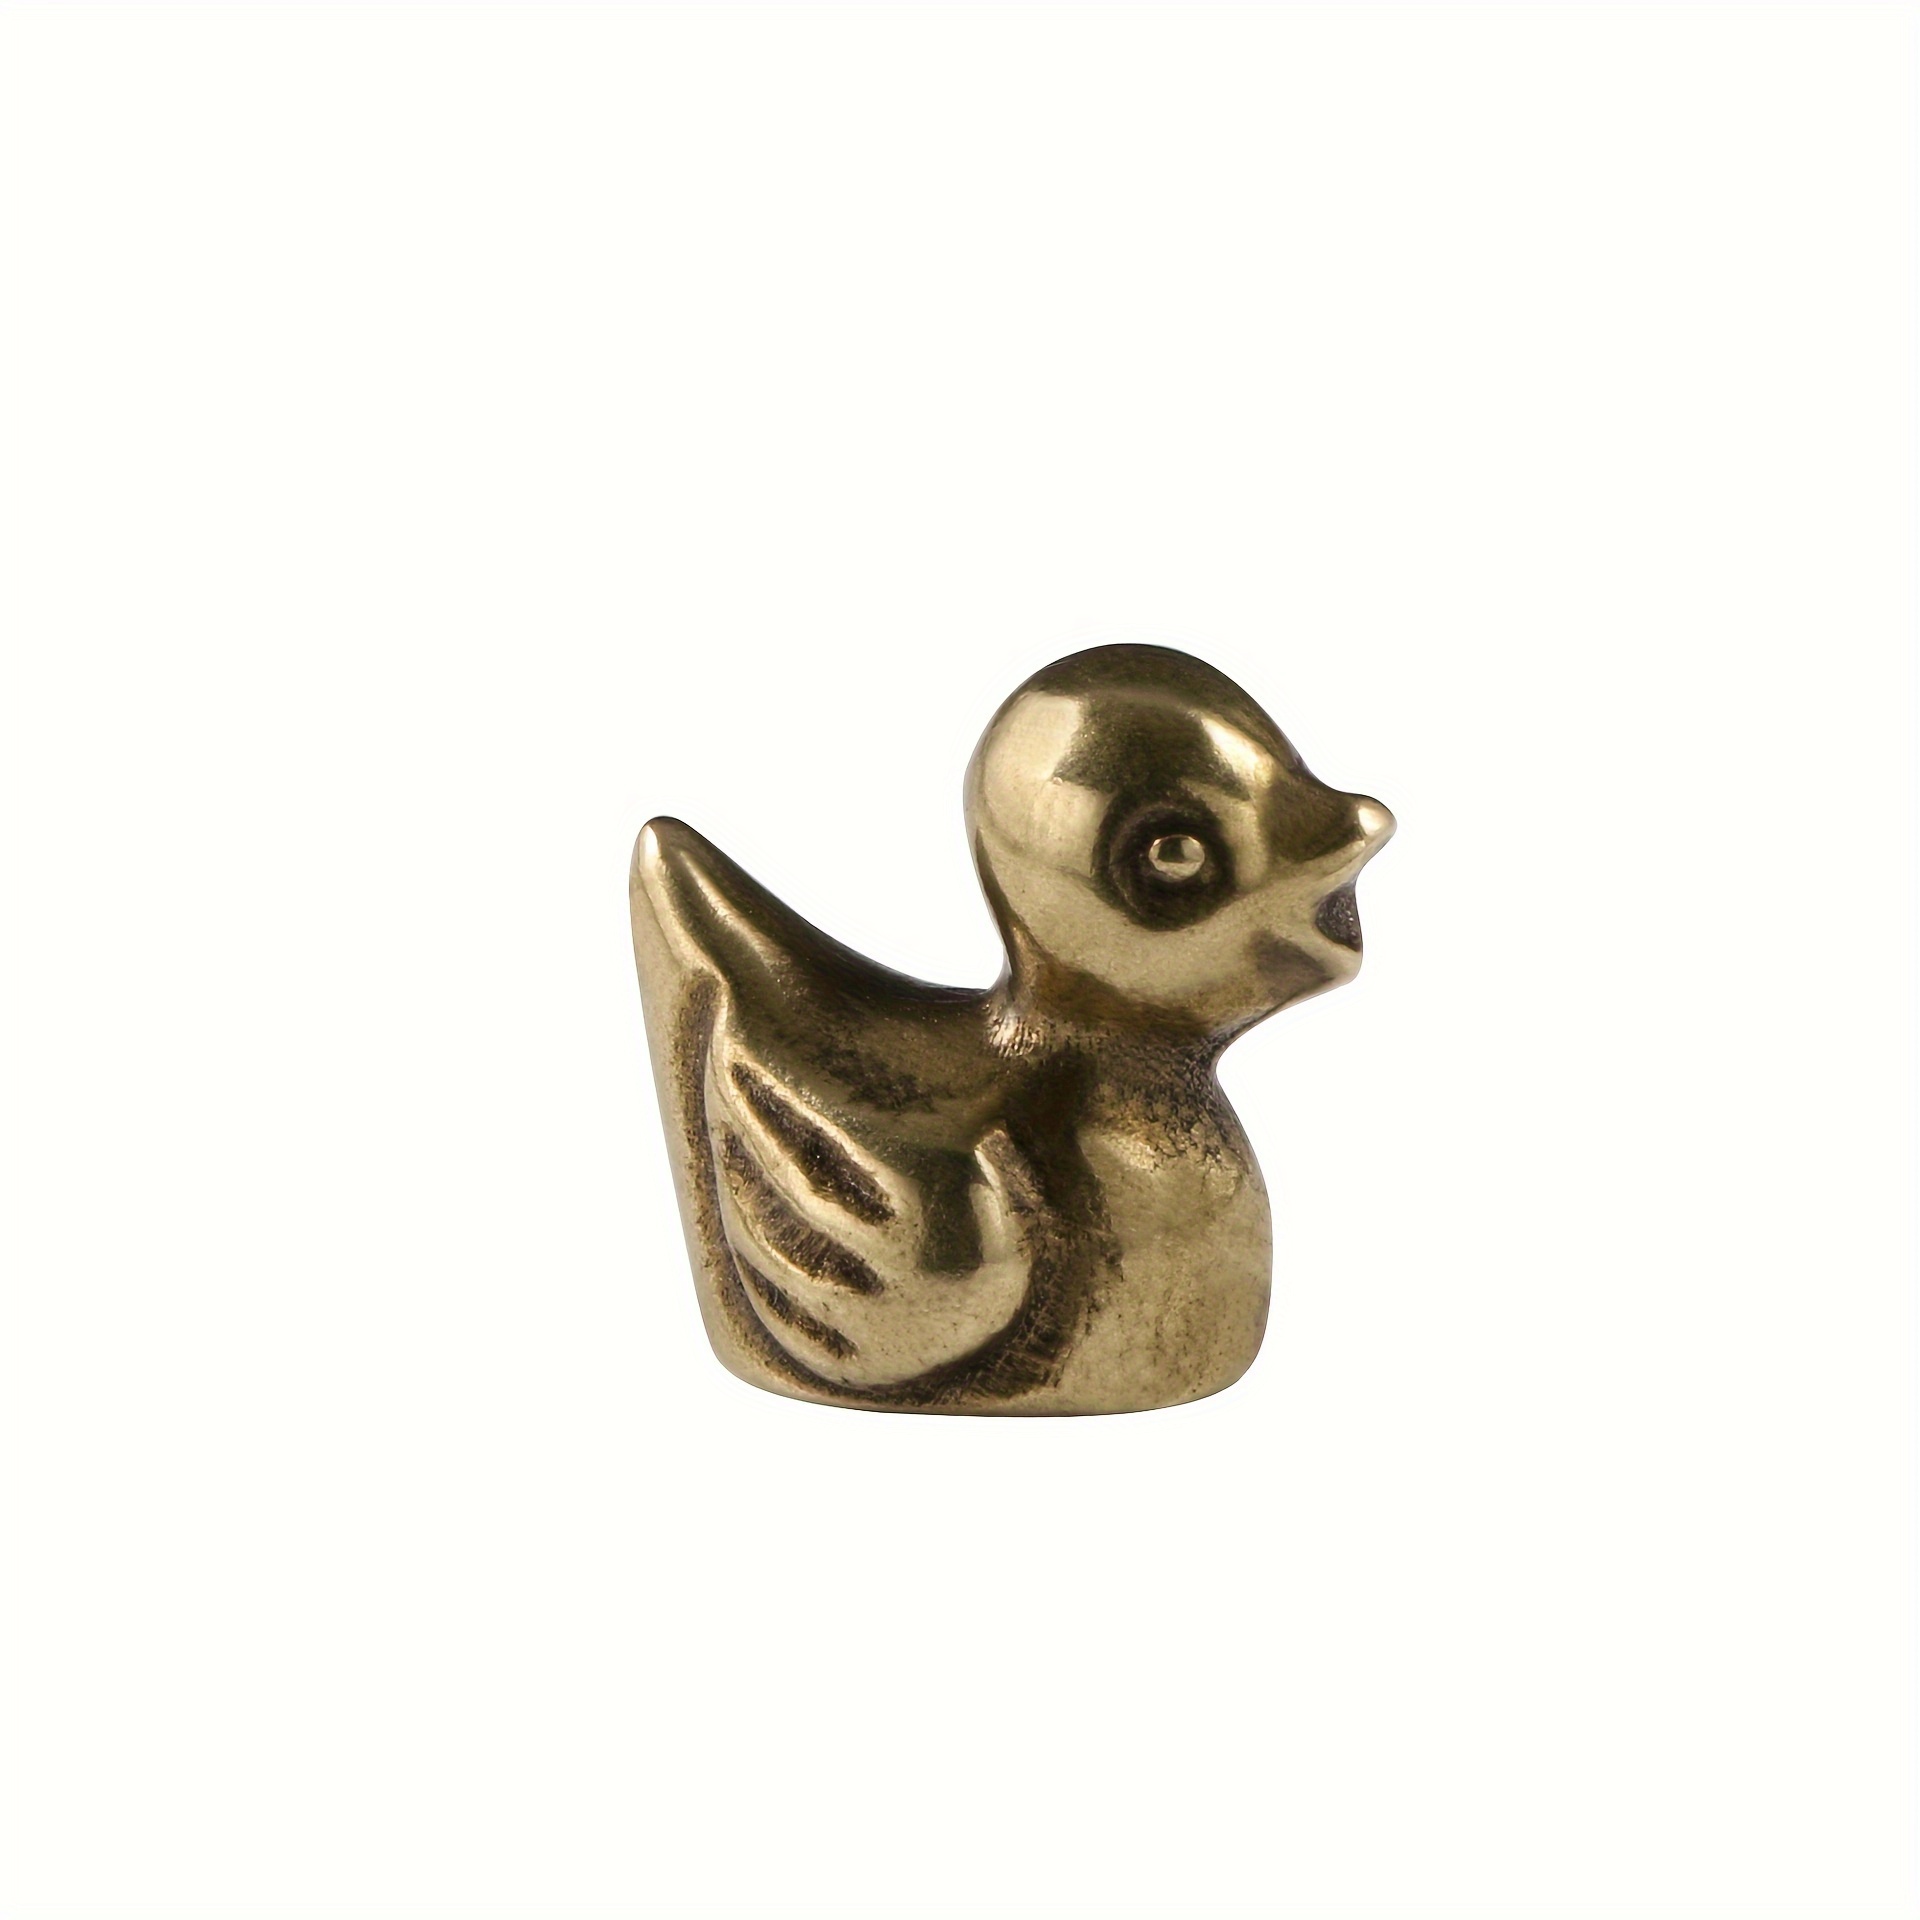 Cheap Antique Copper Small Duck Figurines Ornaments Handmade Brass